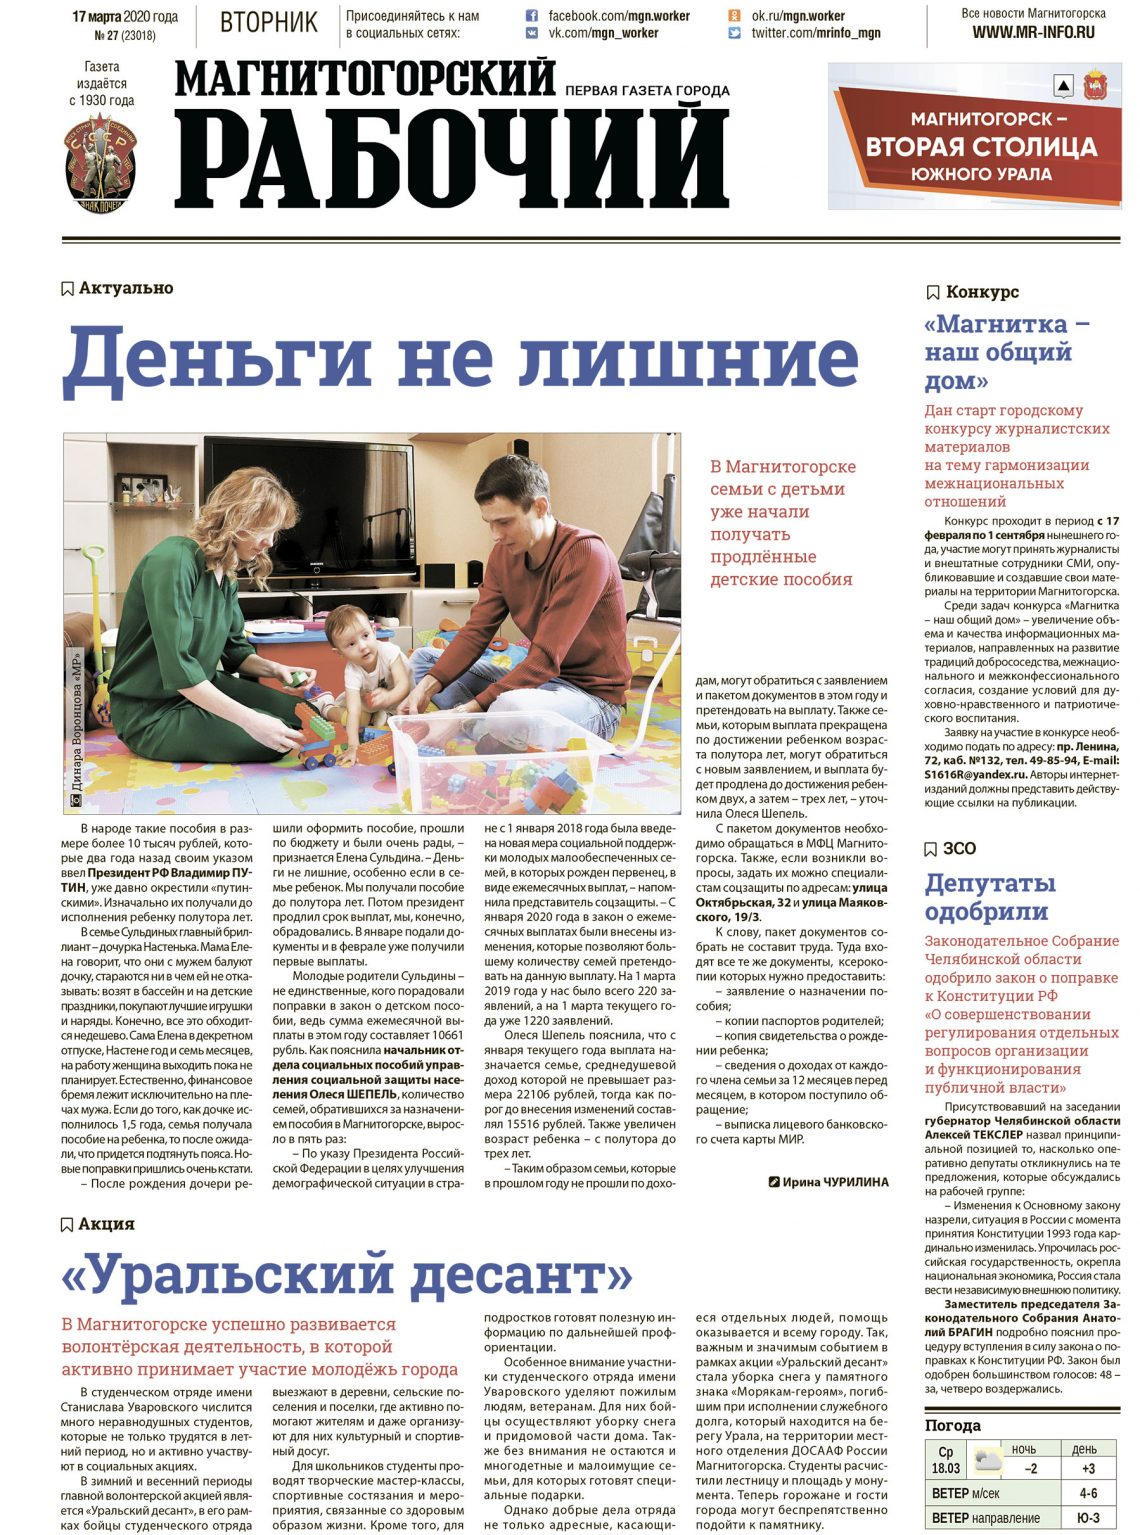 фото архив газеты "Магнитогорский рабочий" за 17 марта 2020